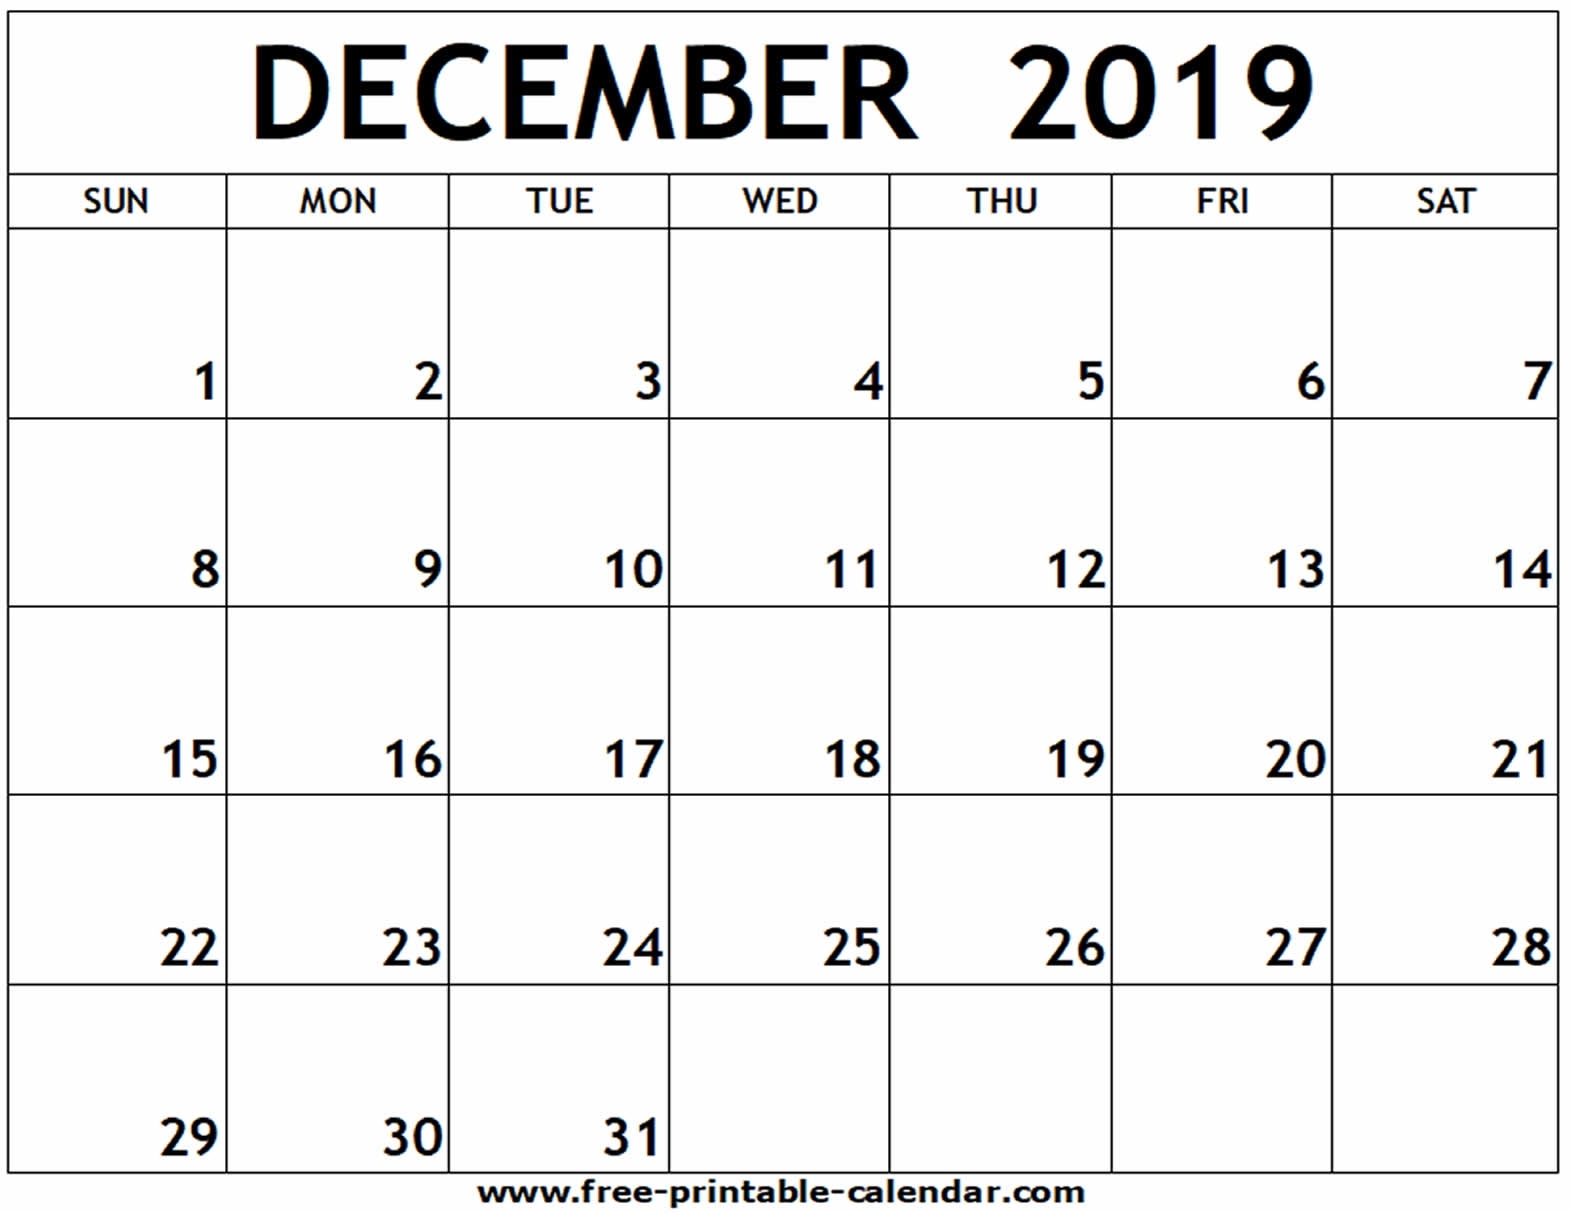 December 2019 Printable Calendar - Free-Printable-Calendar